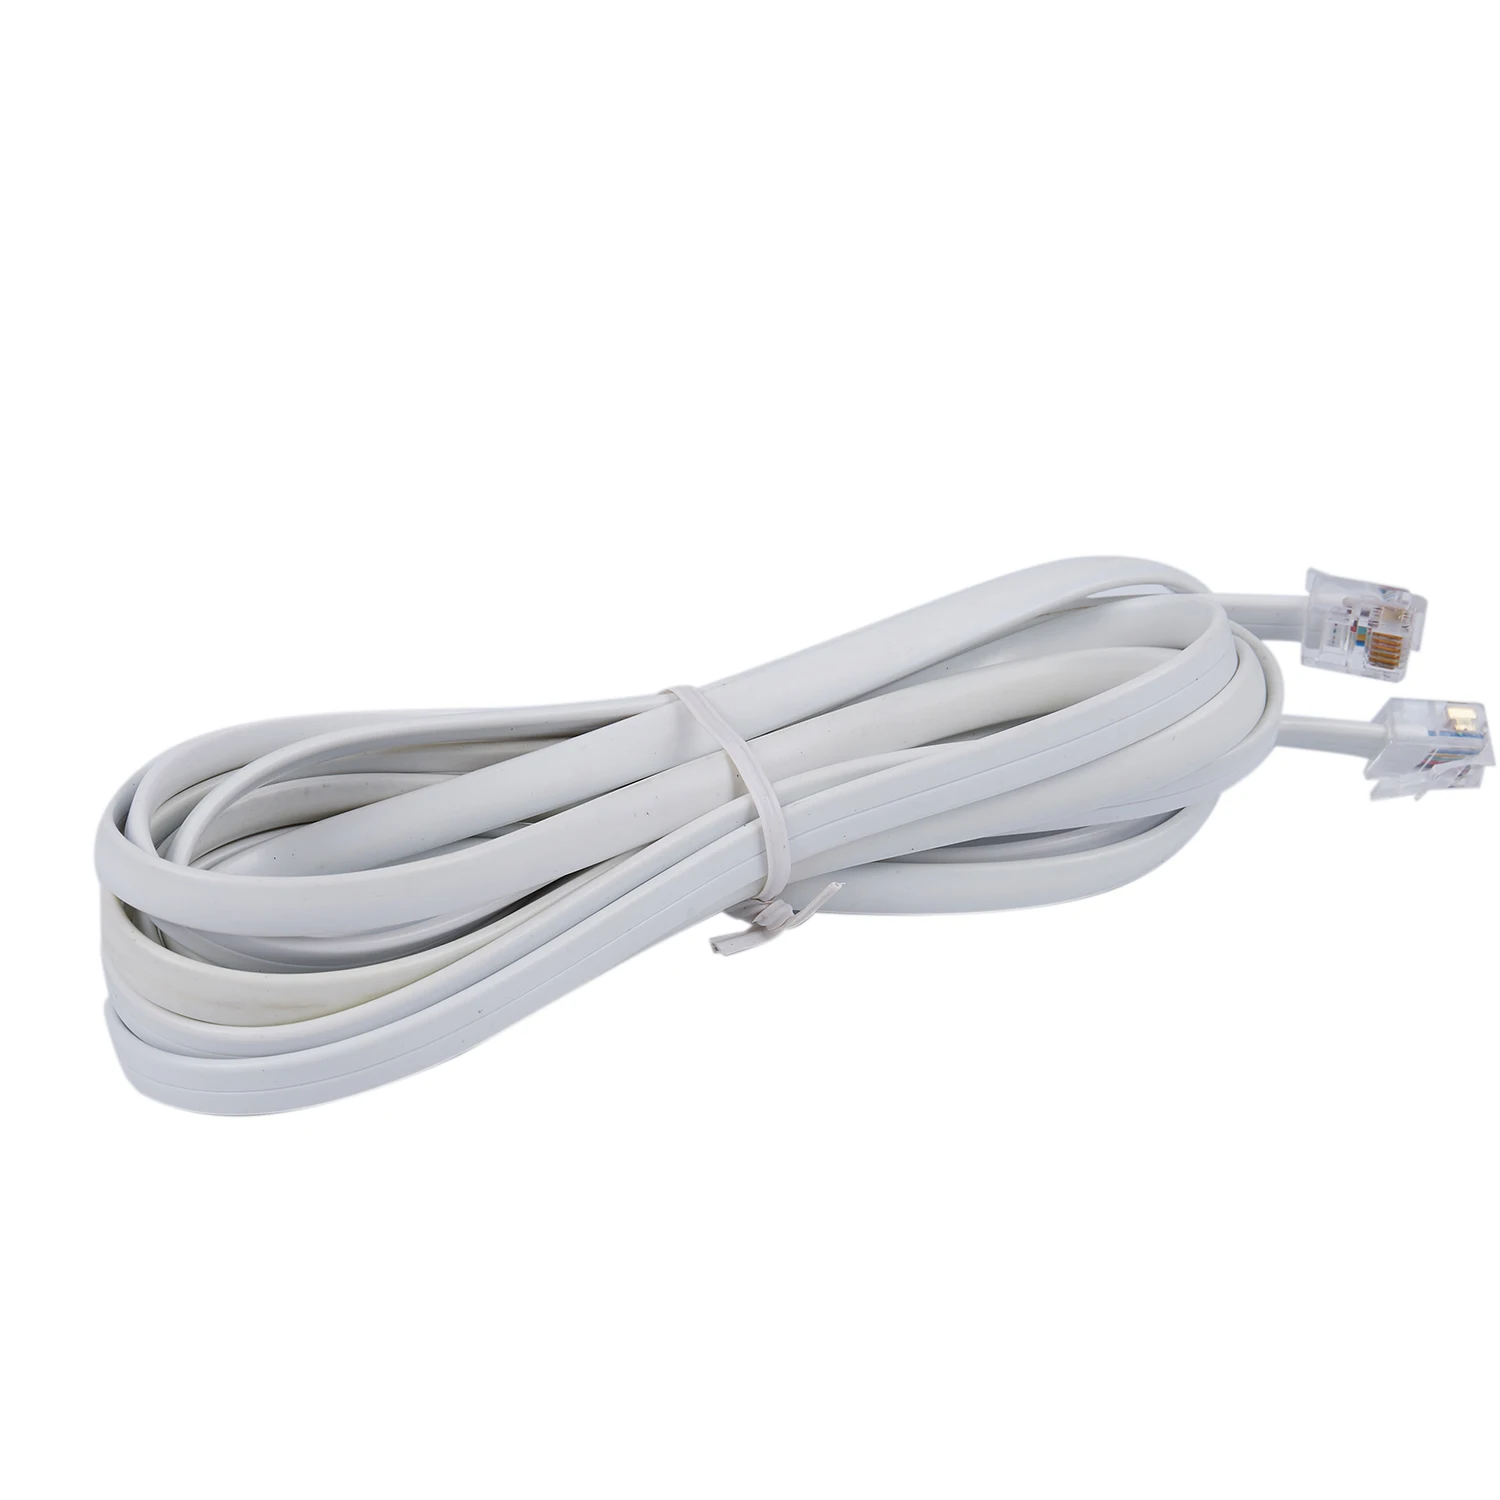 6P6C RJ11 Telephone Extension Fax Modem Cable Line 9.8Ft Length White